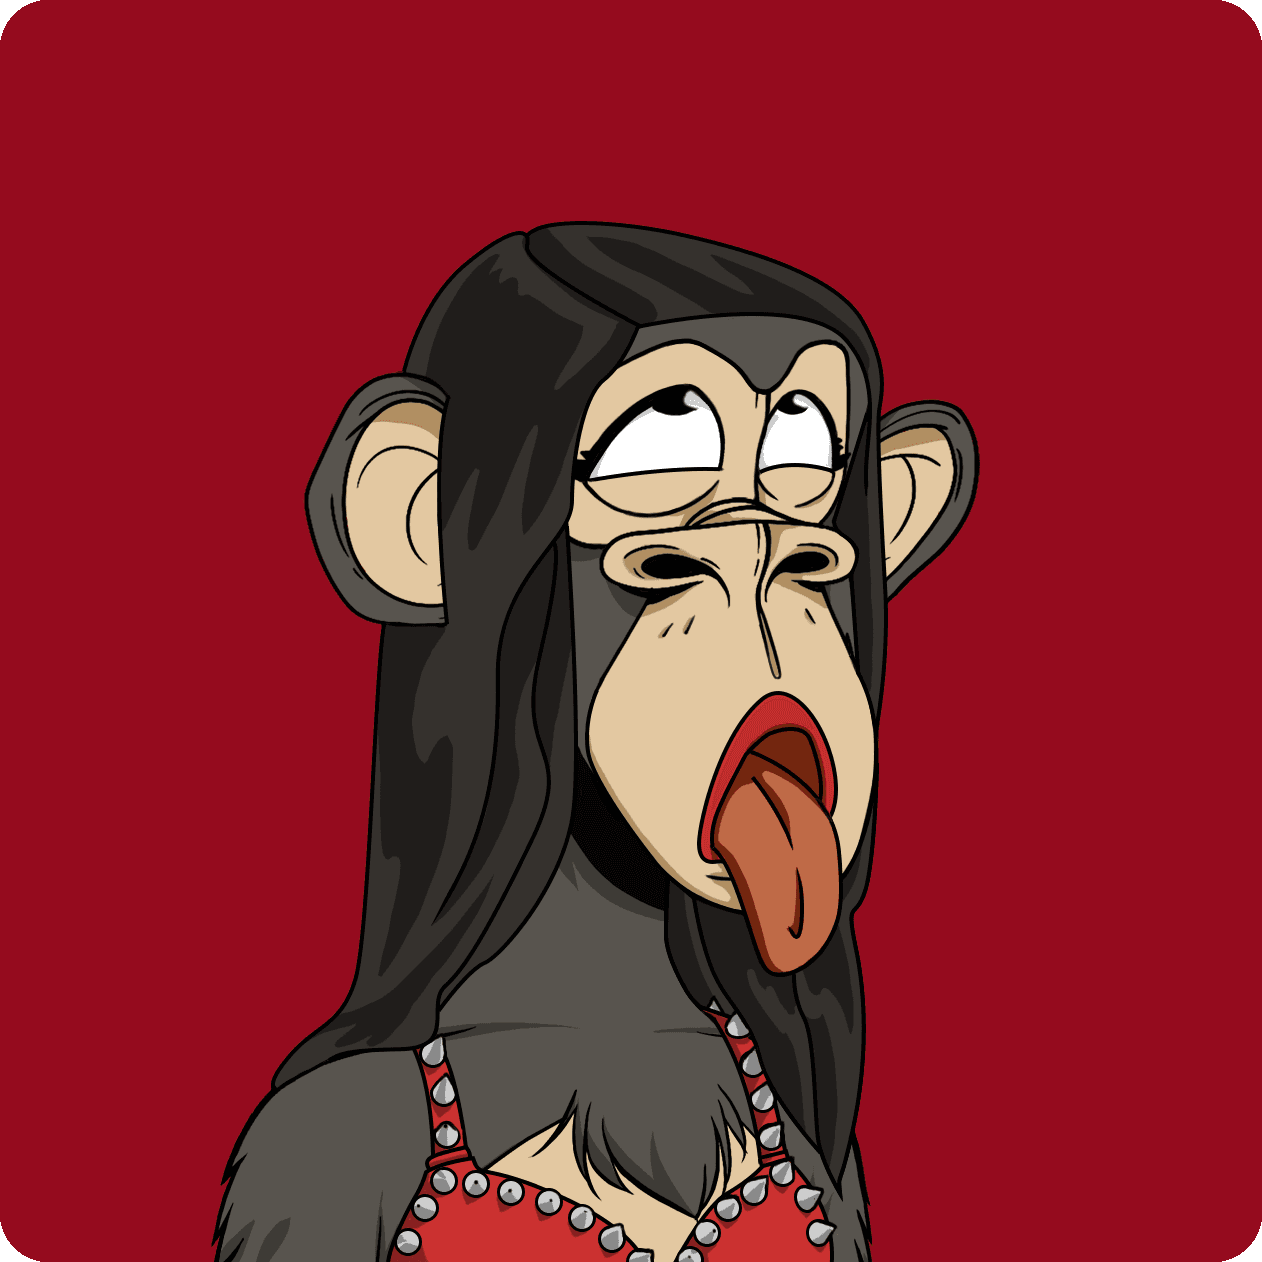 Honorary Bored Ape #26